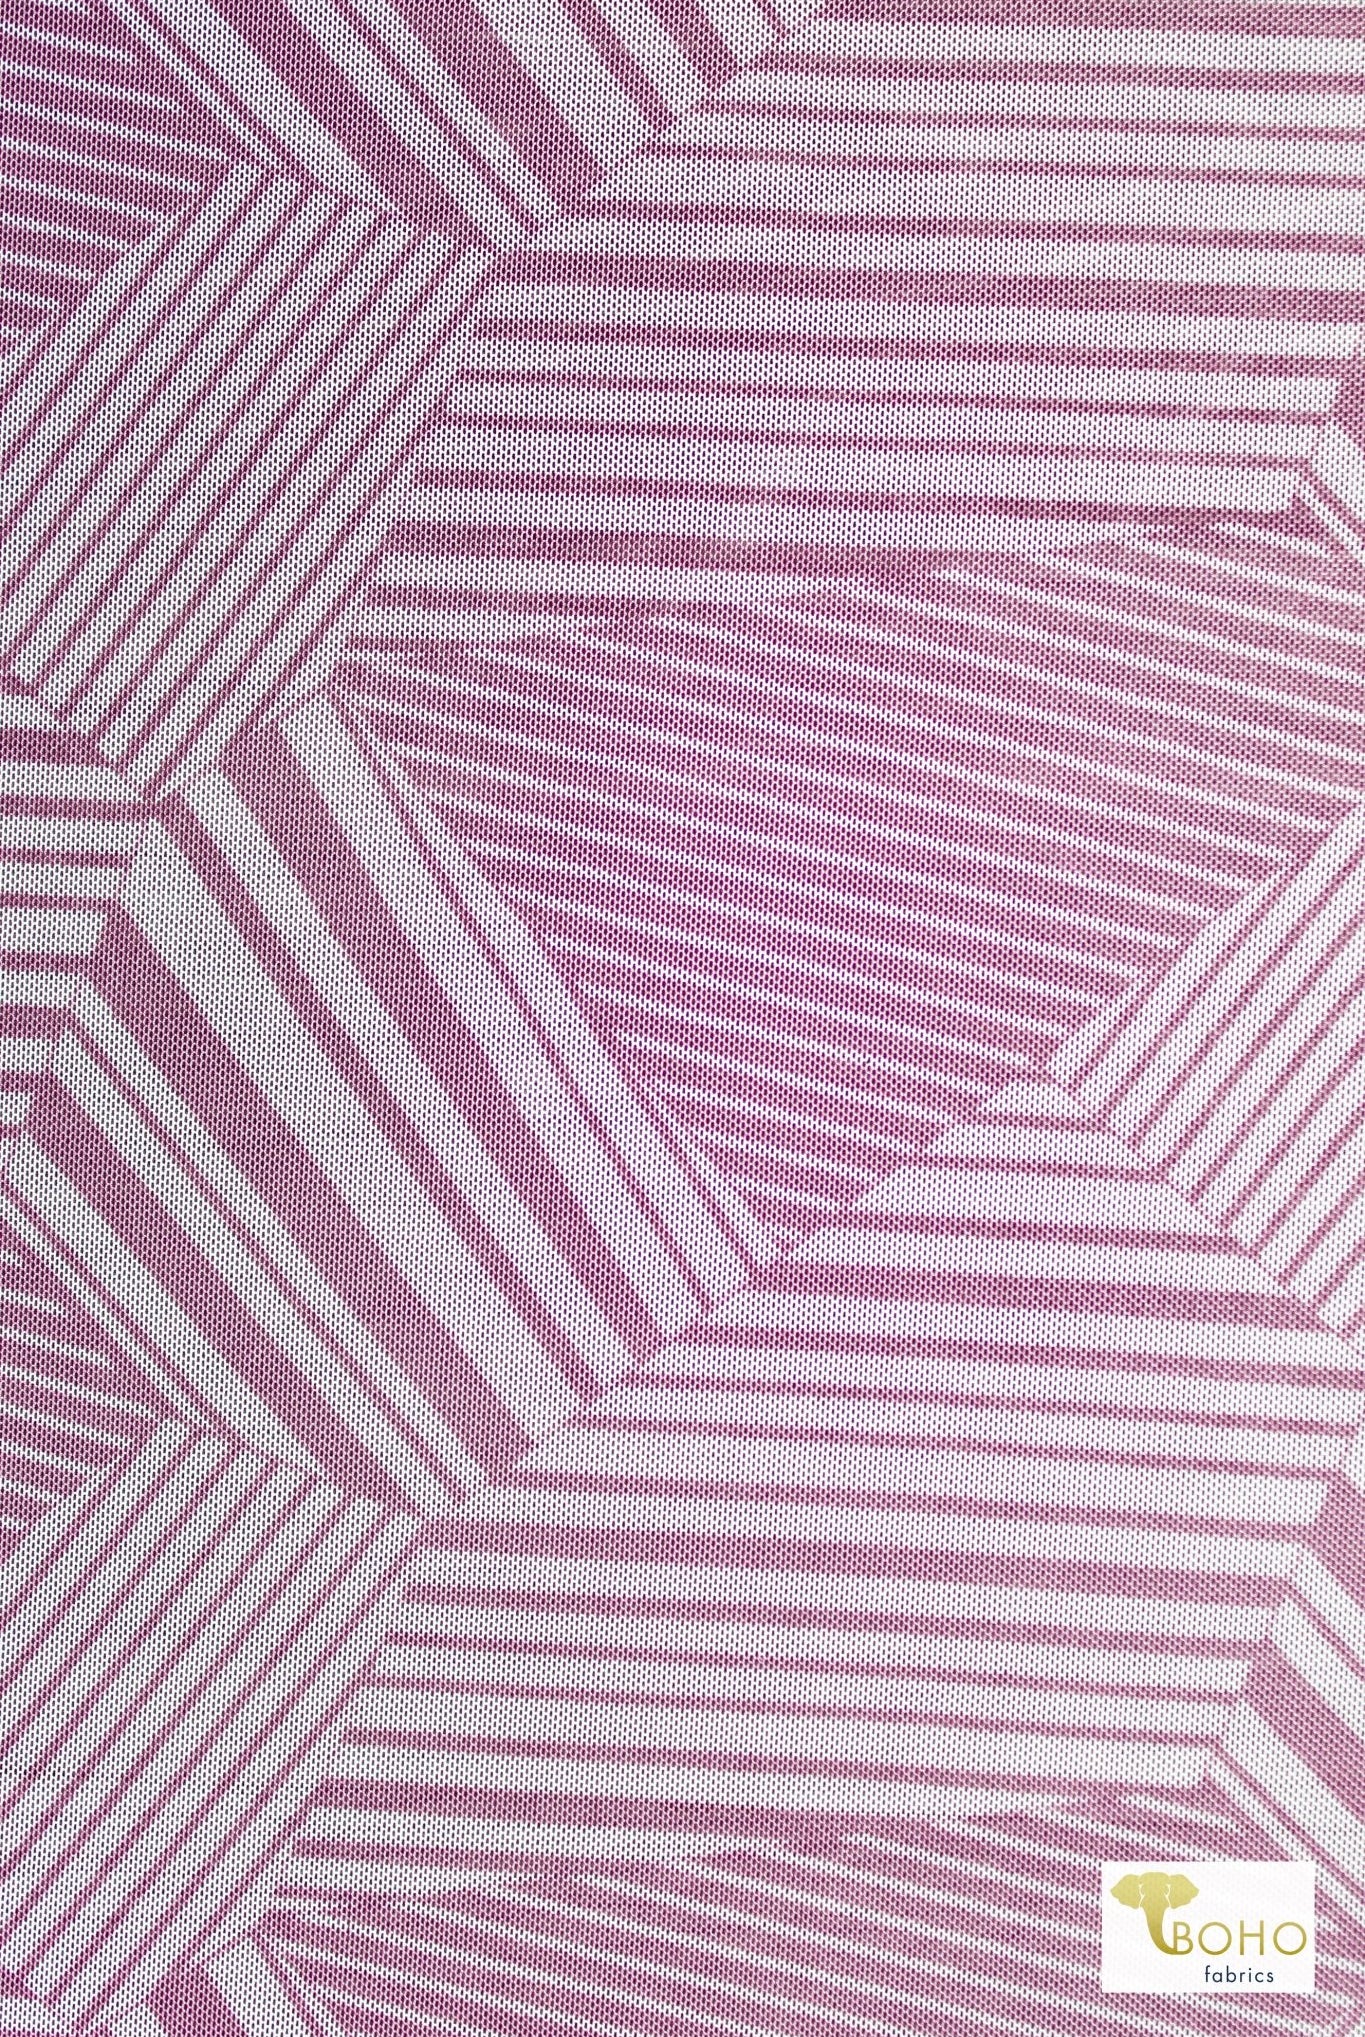 Retro Pink Paradise, Stretch Mesh Print Fabric - Boho Fabrics